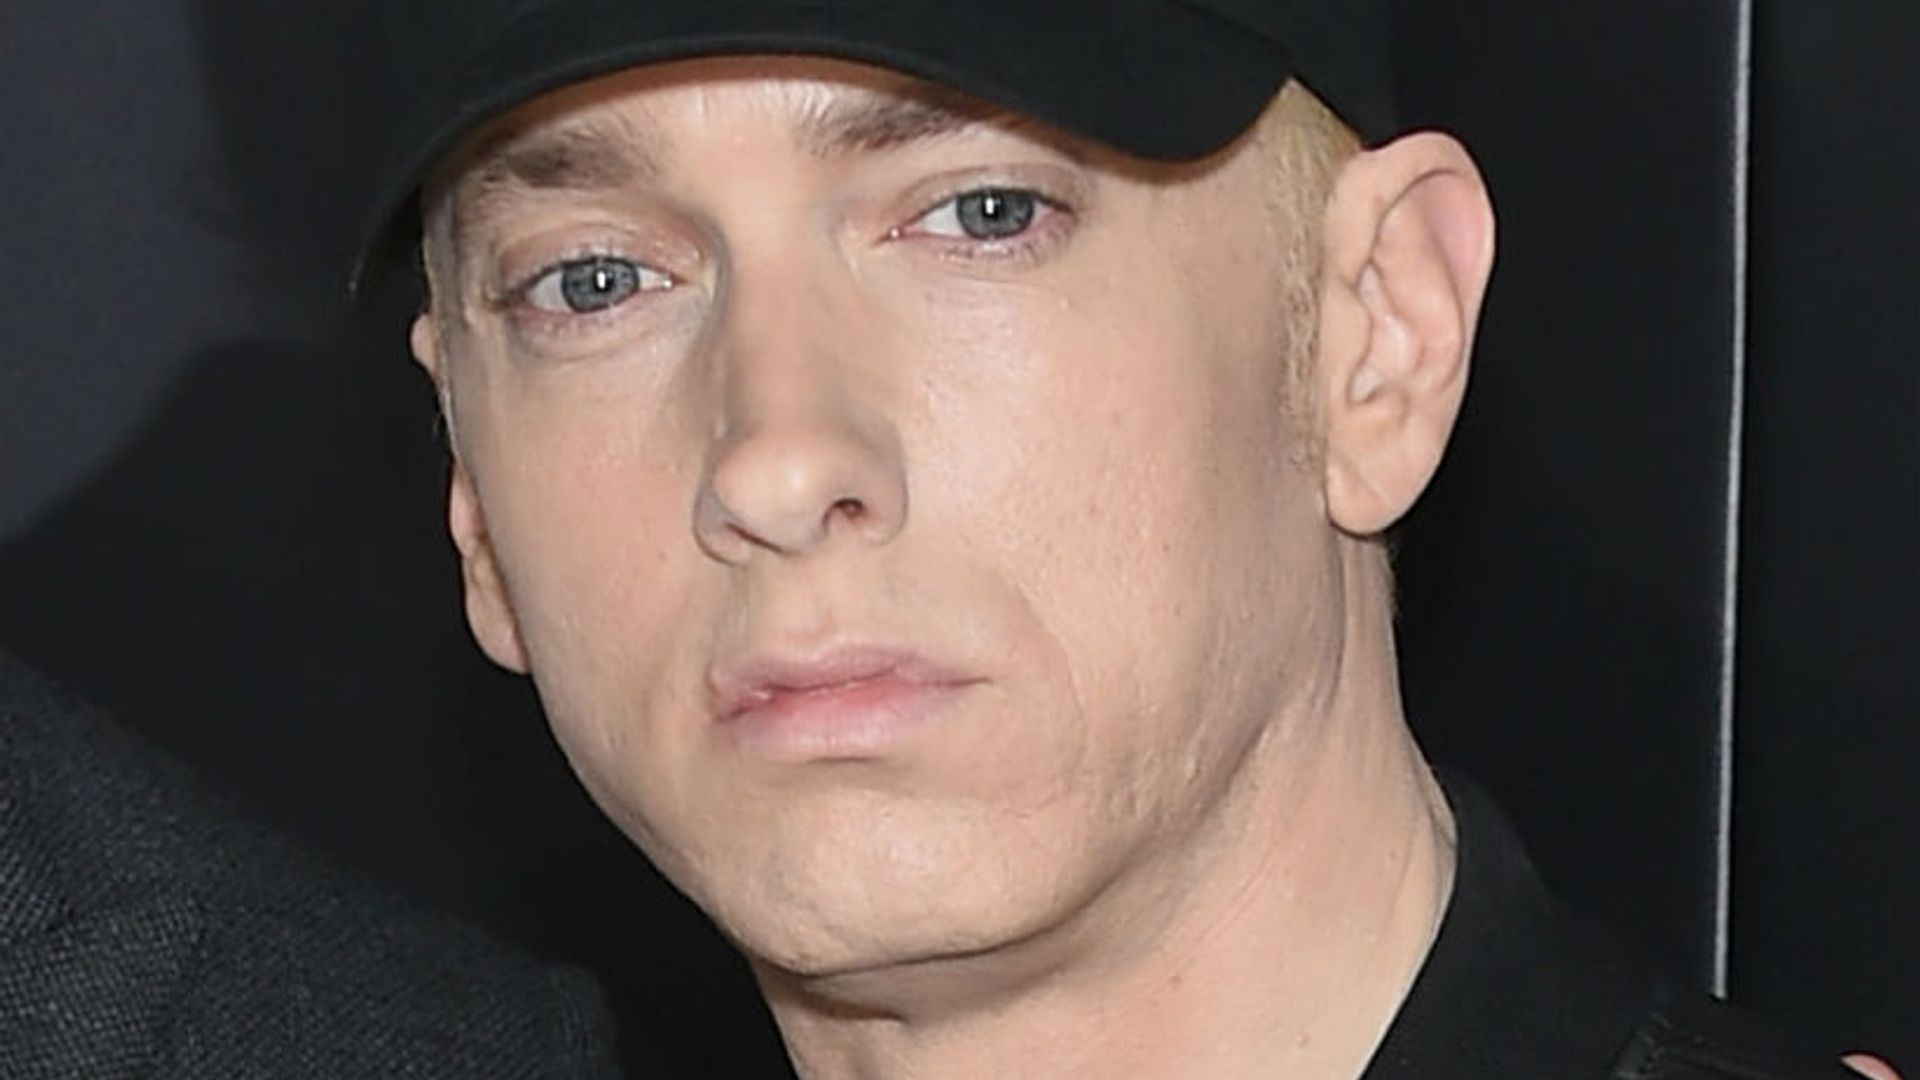 Eminem celebrates 10 years of being sober with inspiring photo